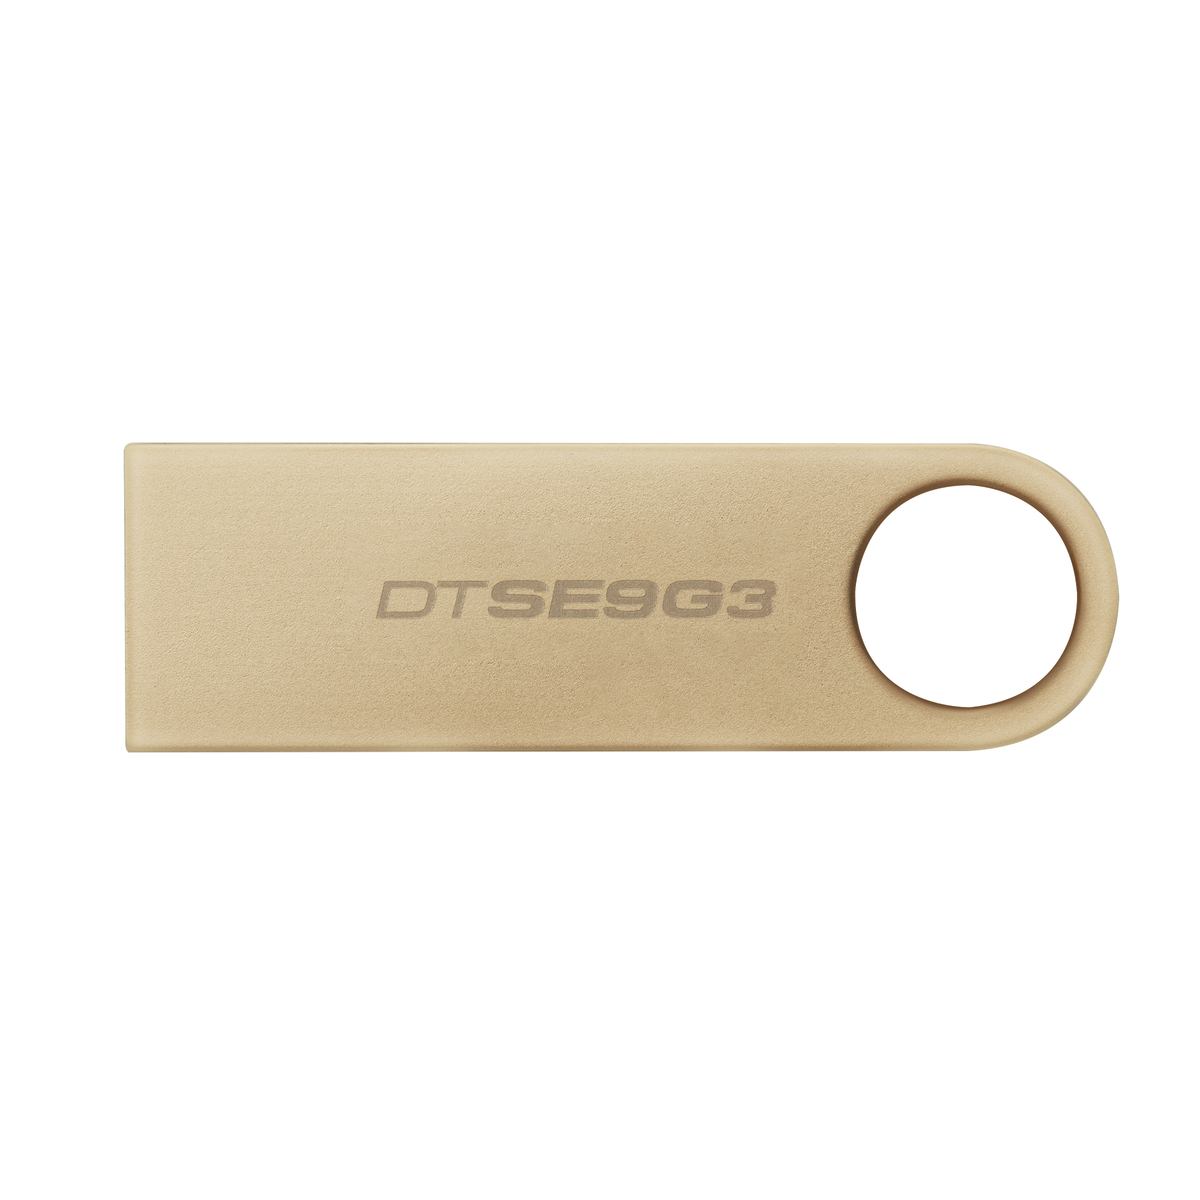 FD 128GB DATA TRAVELER USB3.2 GEN1 METAL